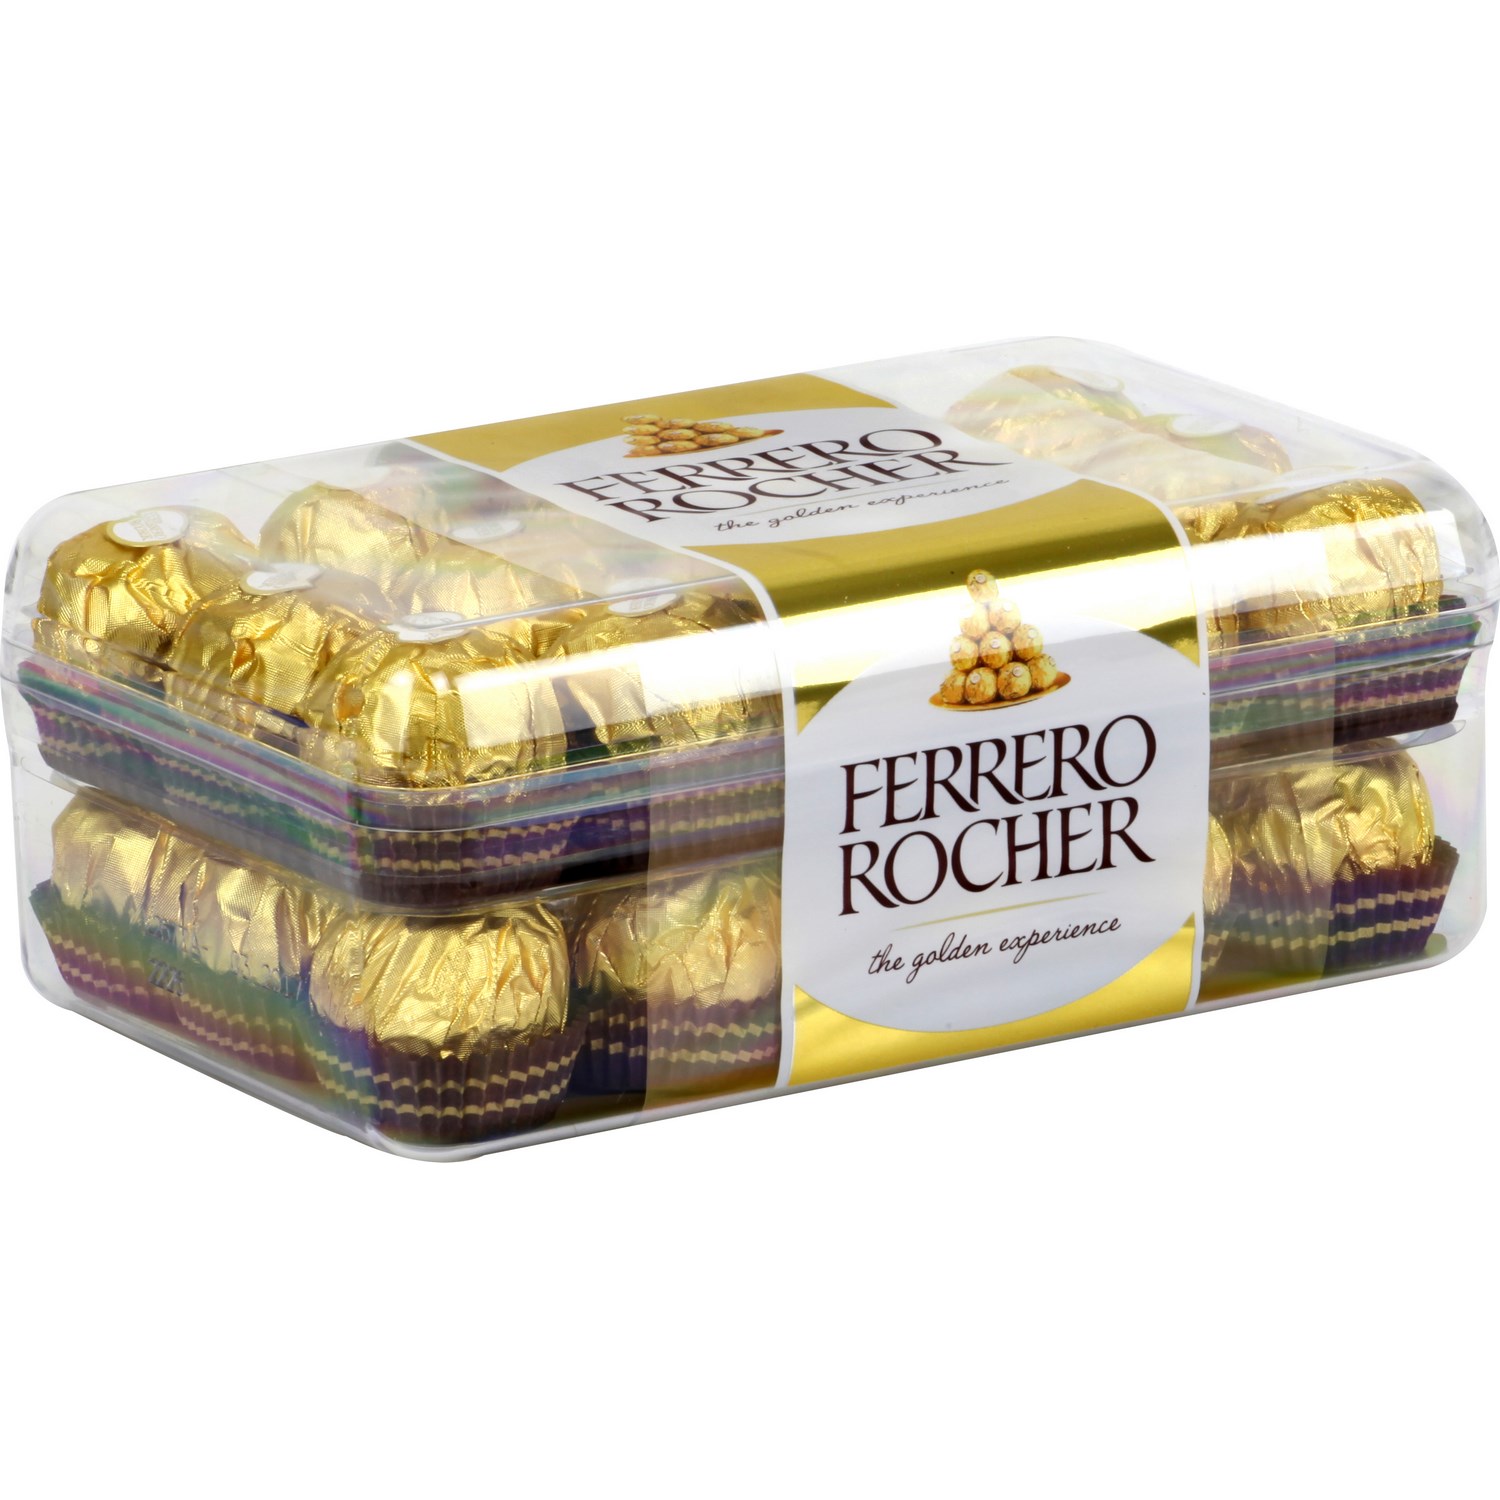 Coffret Ferrero Rocher